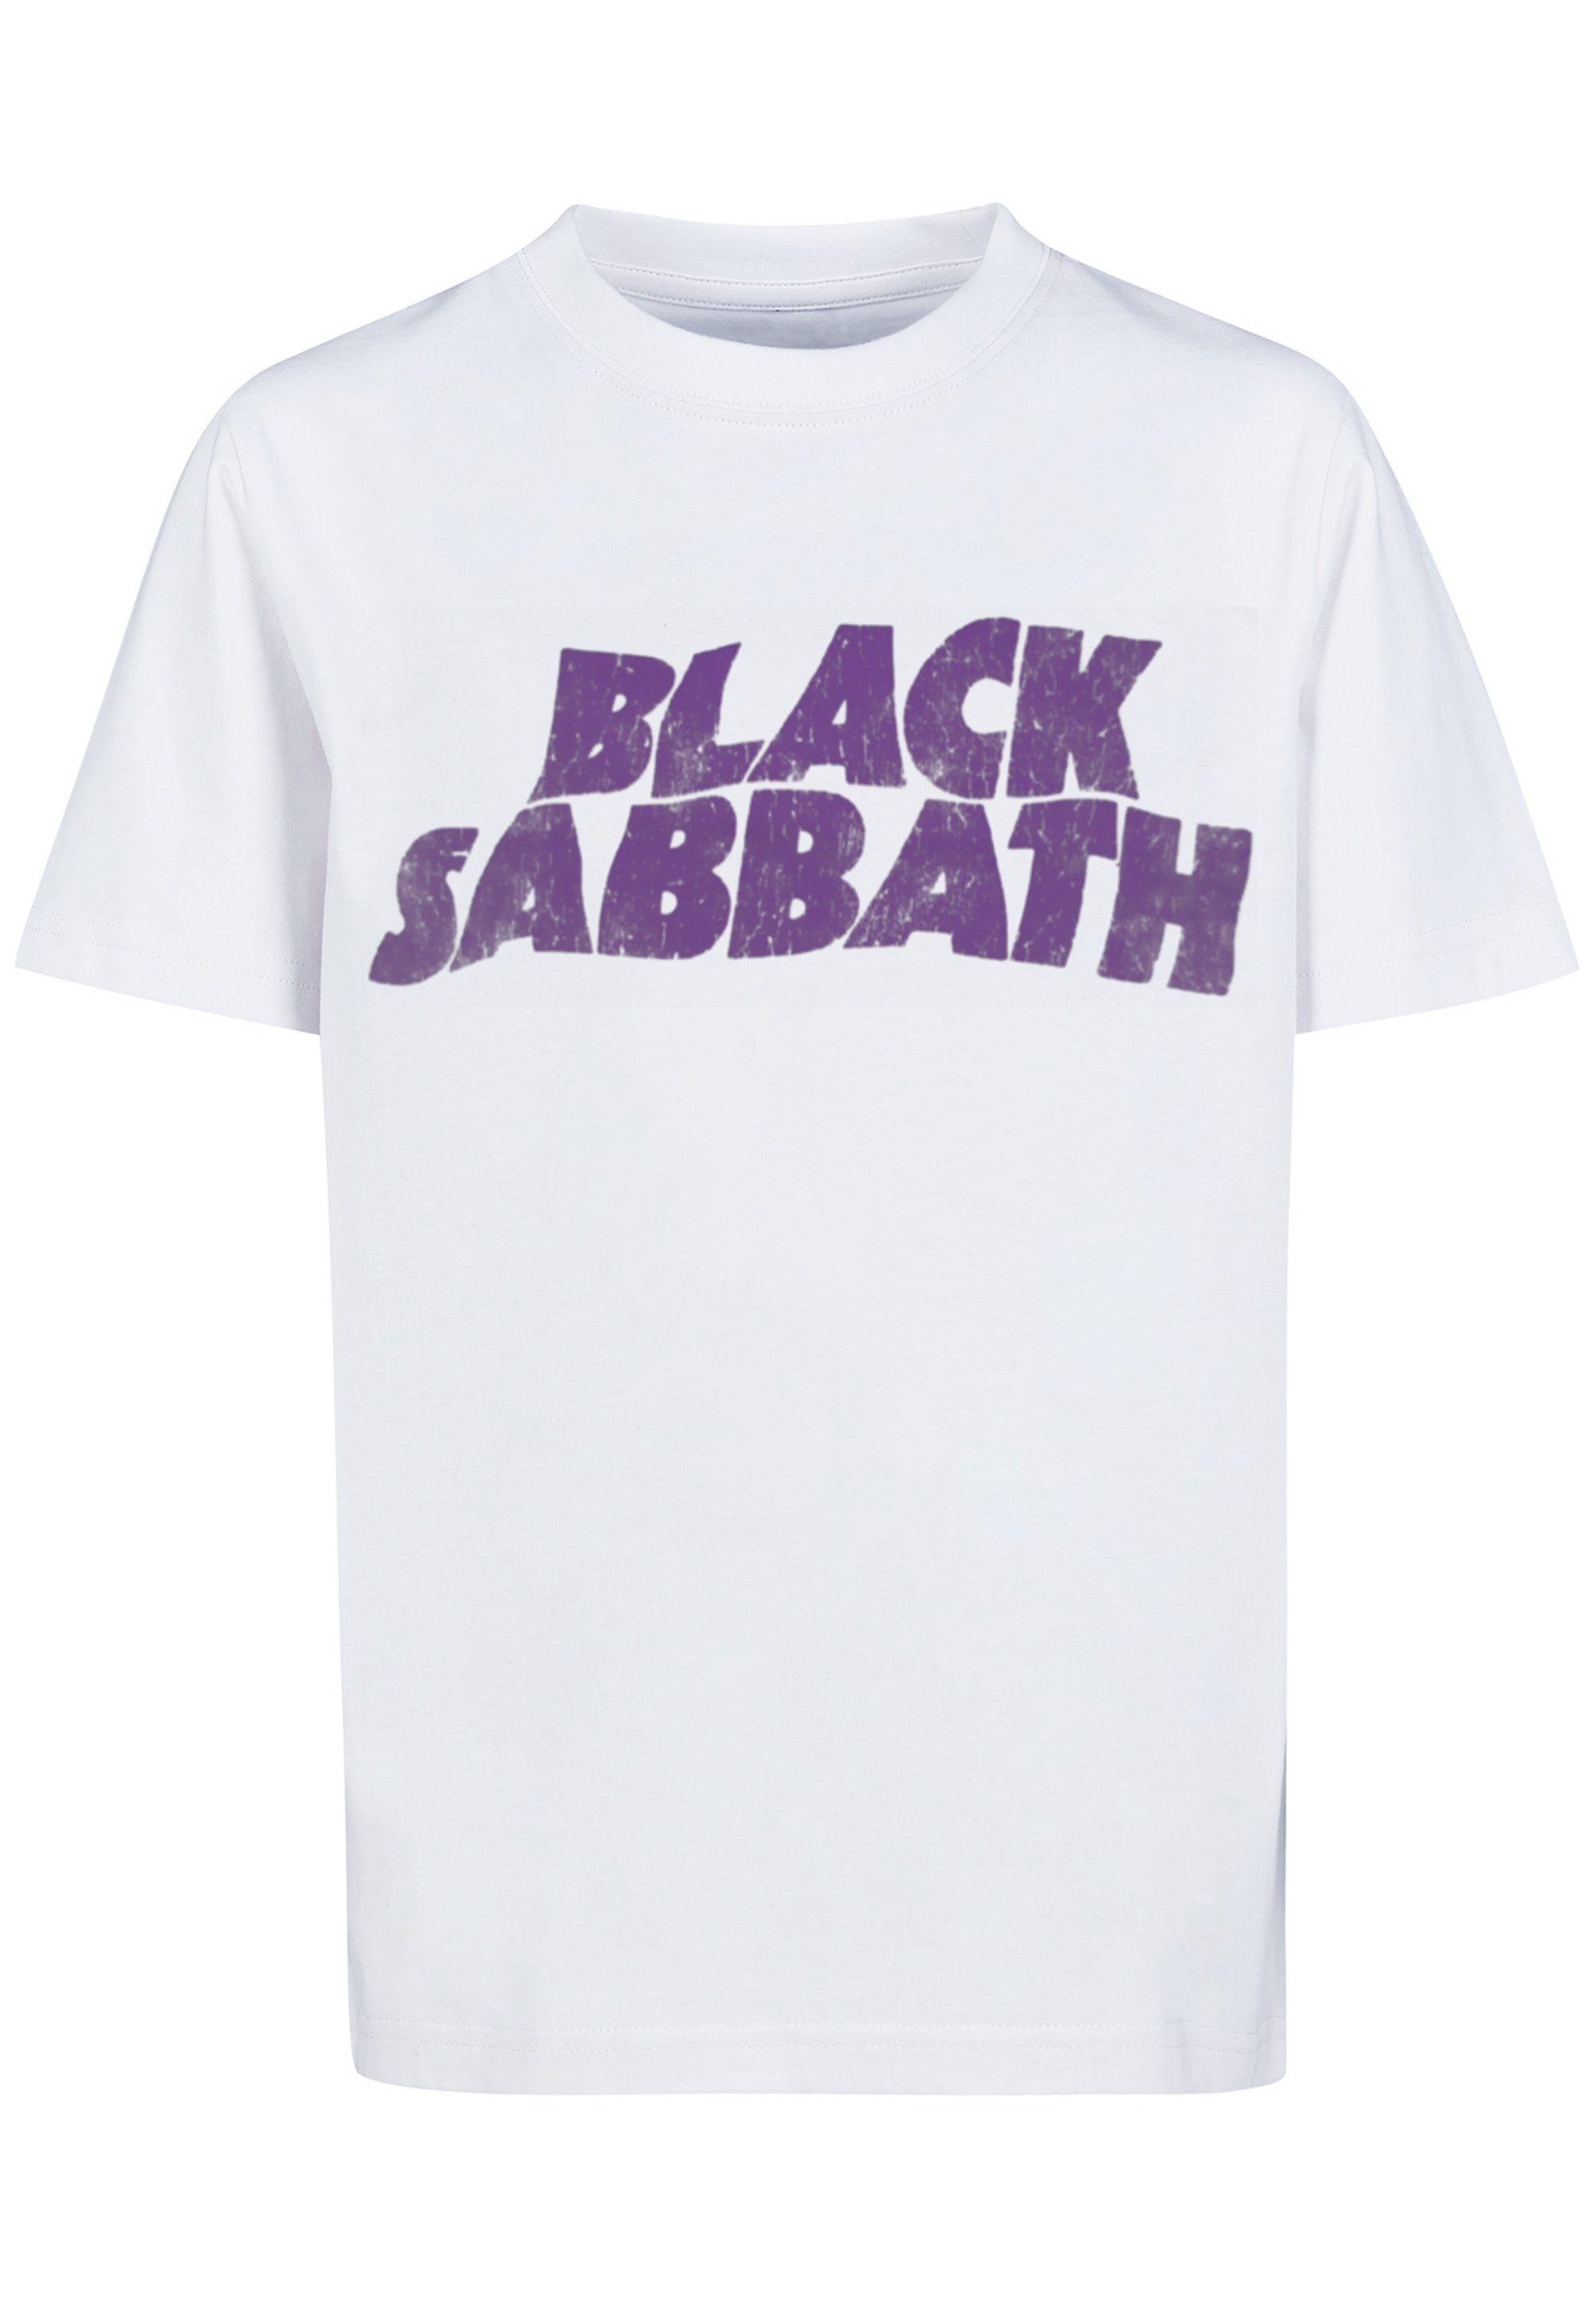 F4NT4STIC T-Shirt Heavy Black Print Band weiß Distressed Black Sabbath Wavy Metal Logo